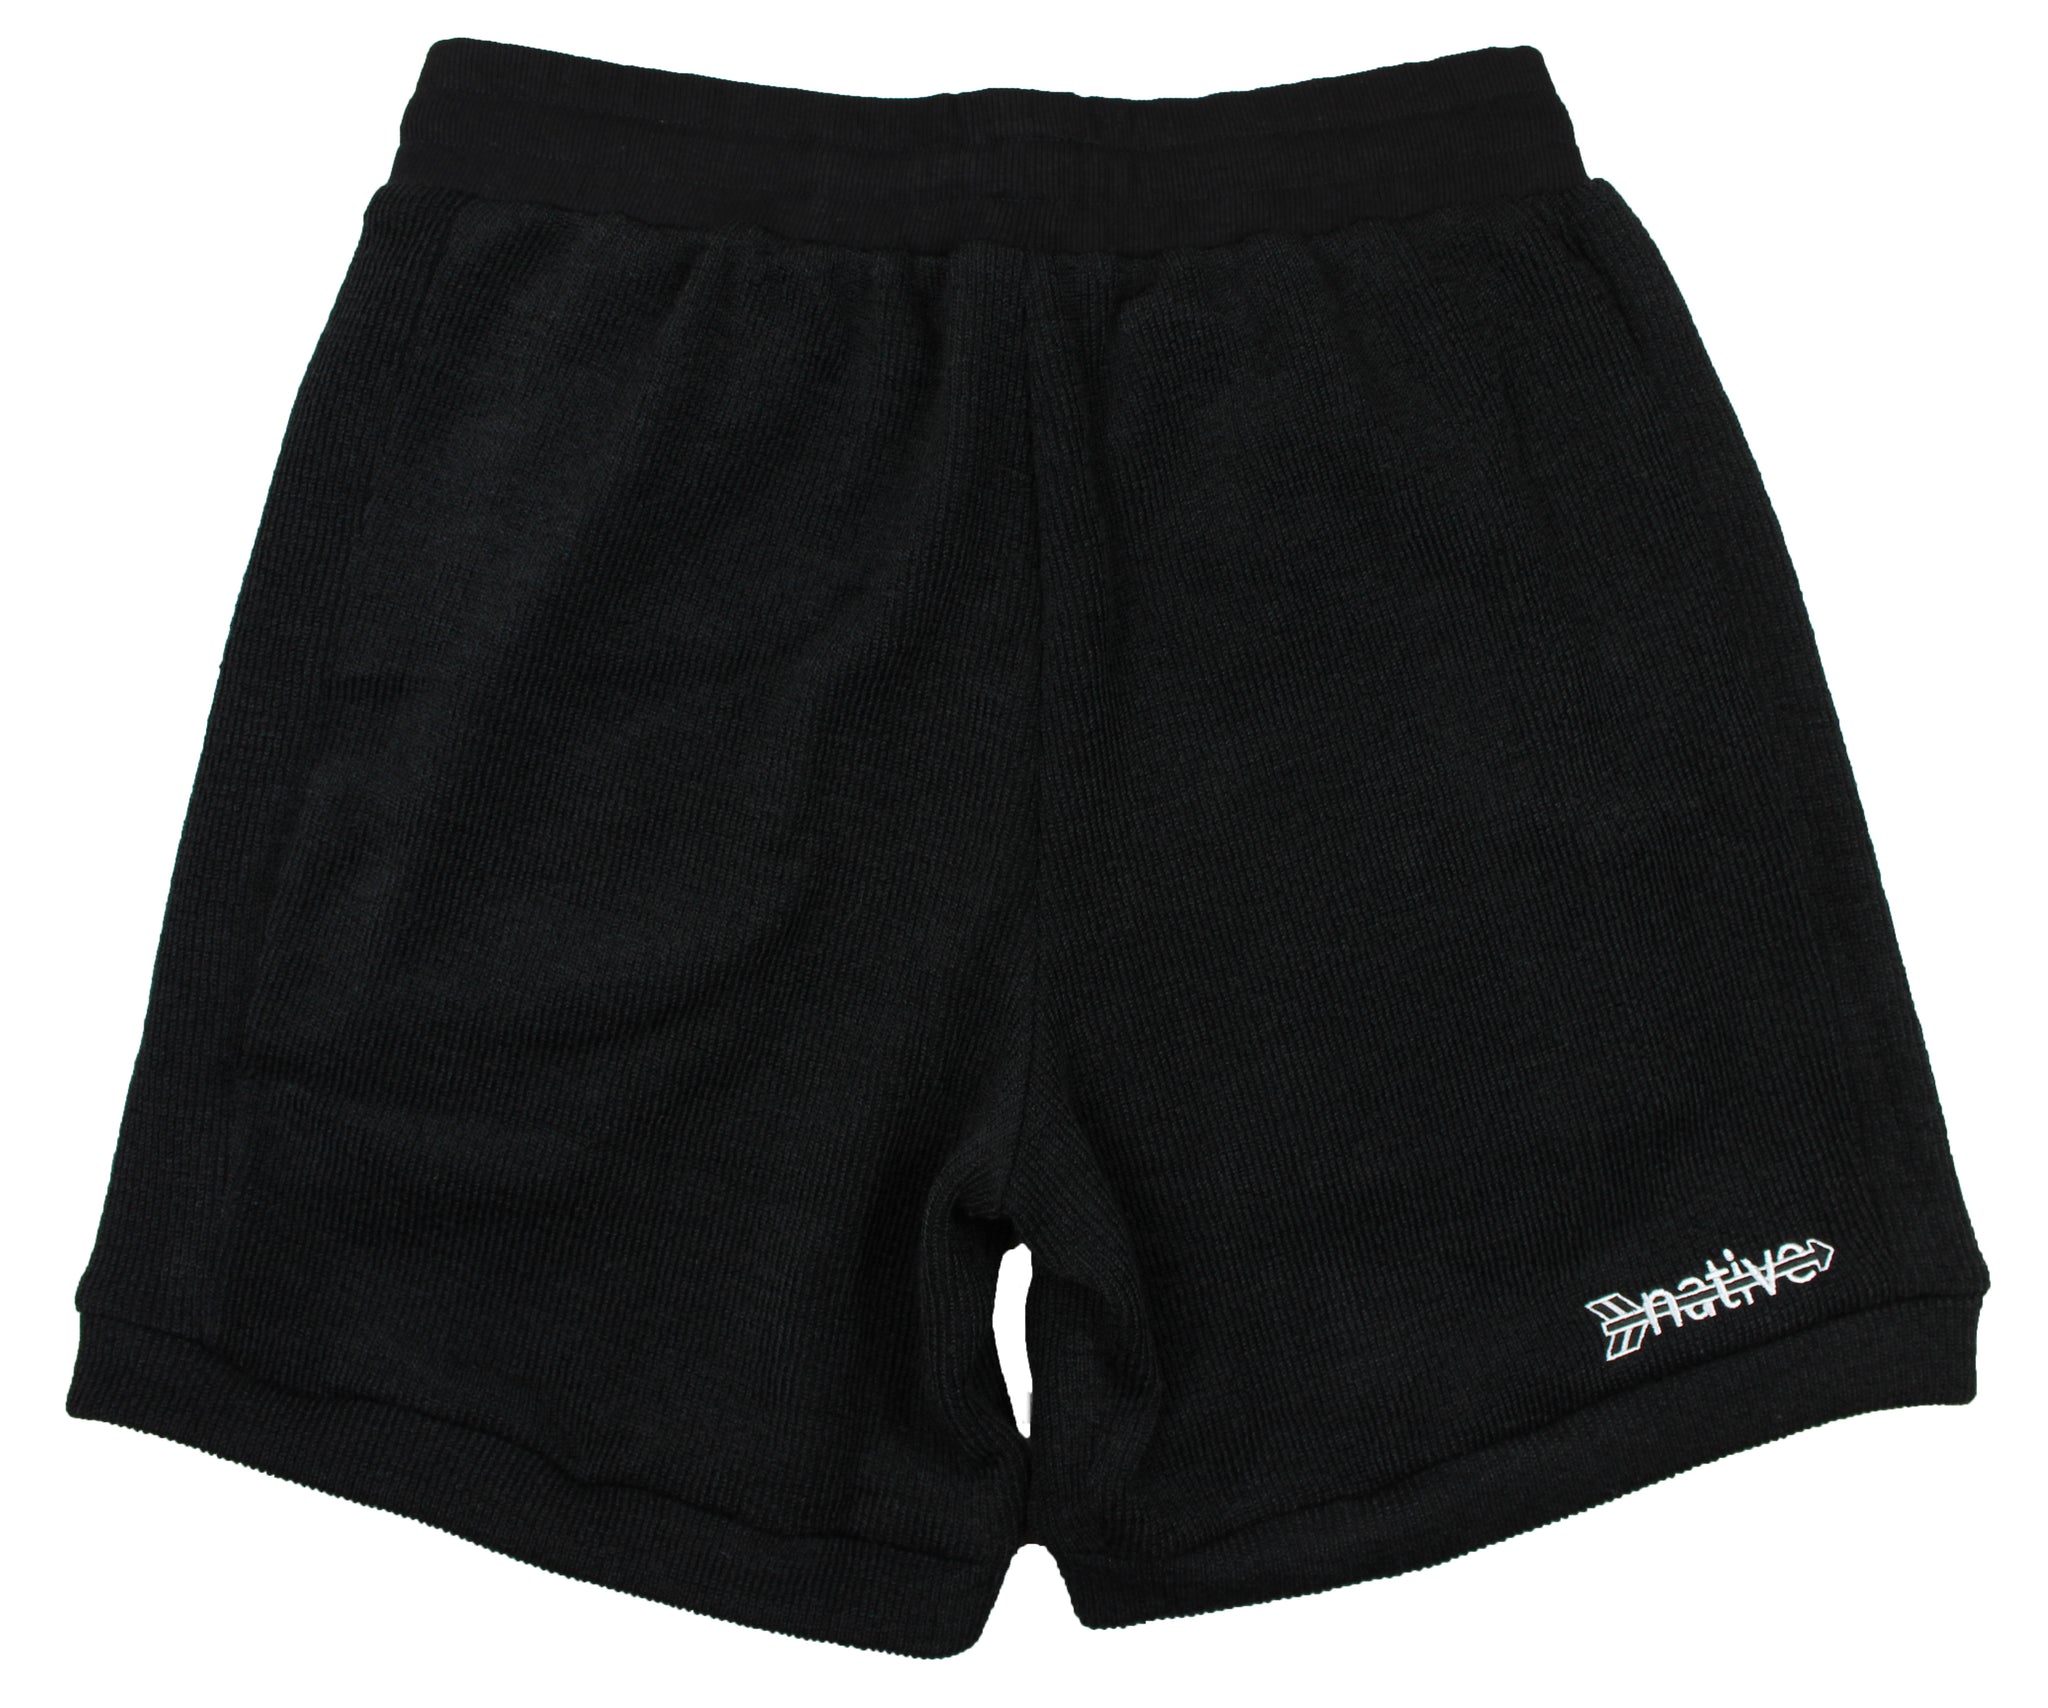 corduroy knit shorts in black